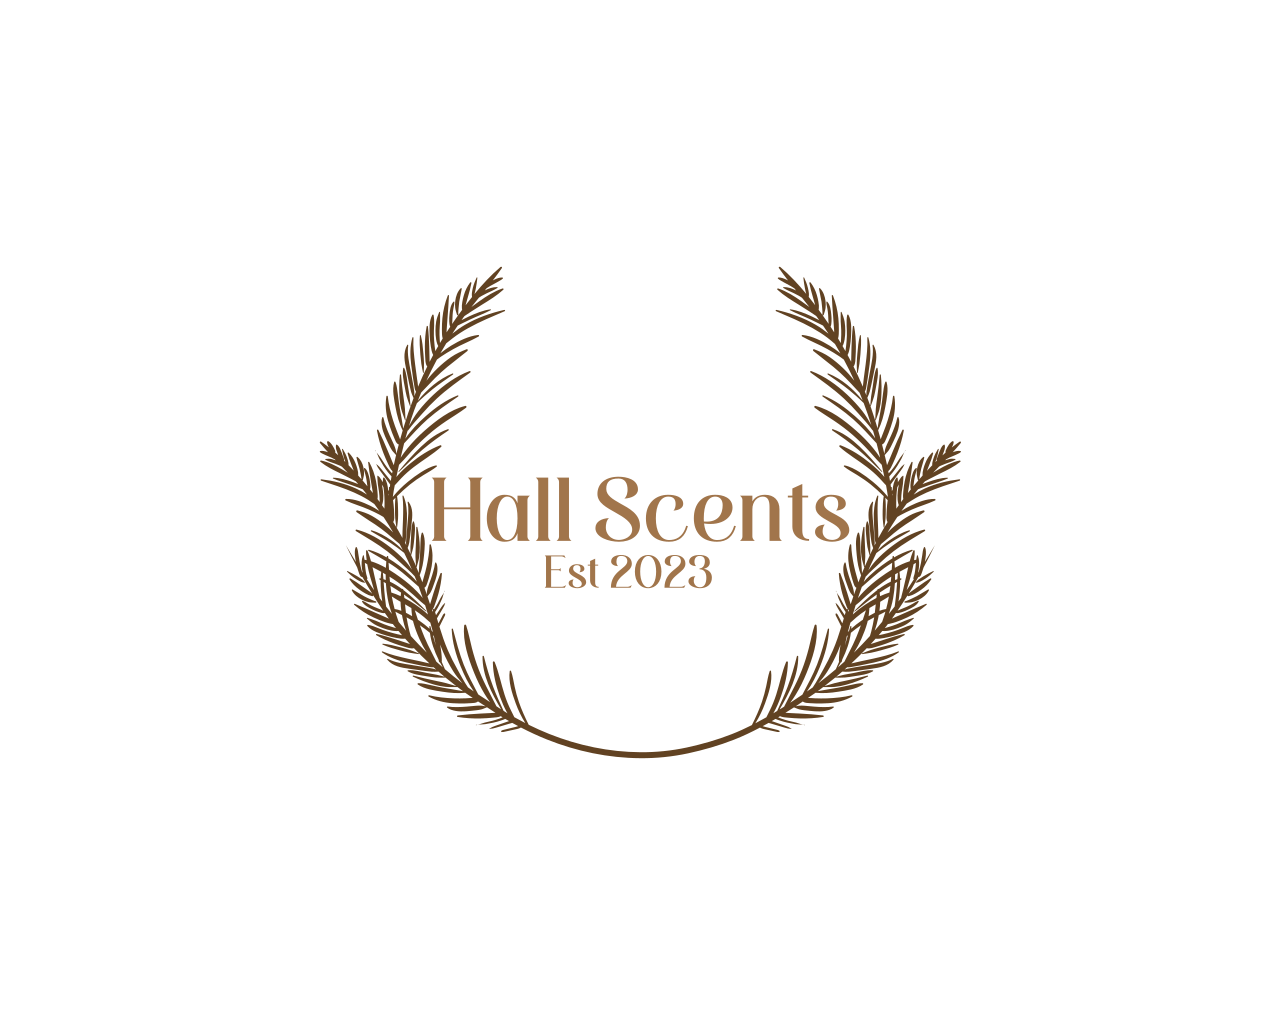 Hall Scents